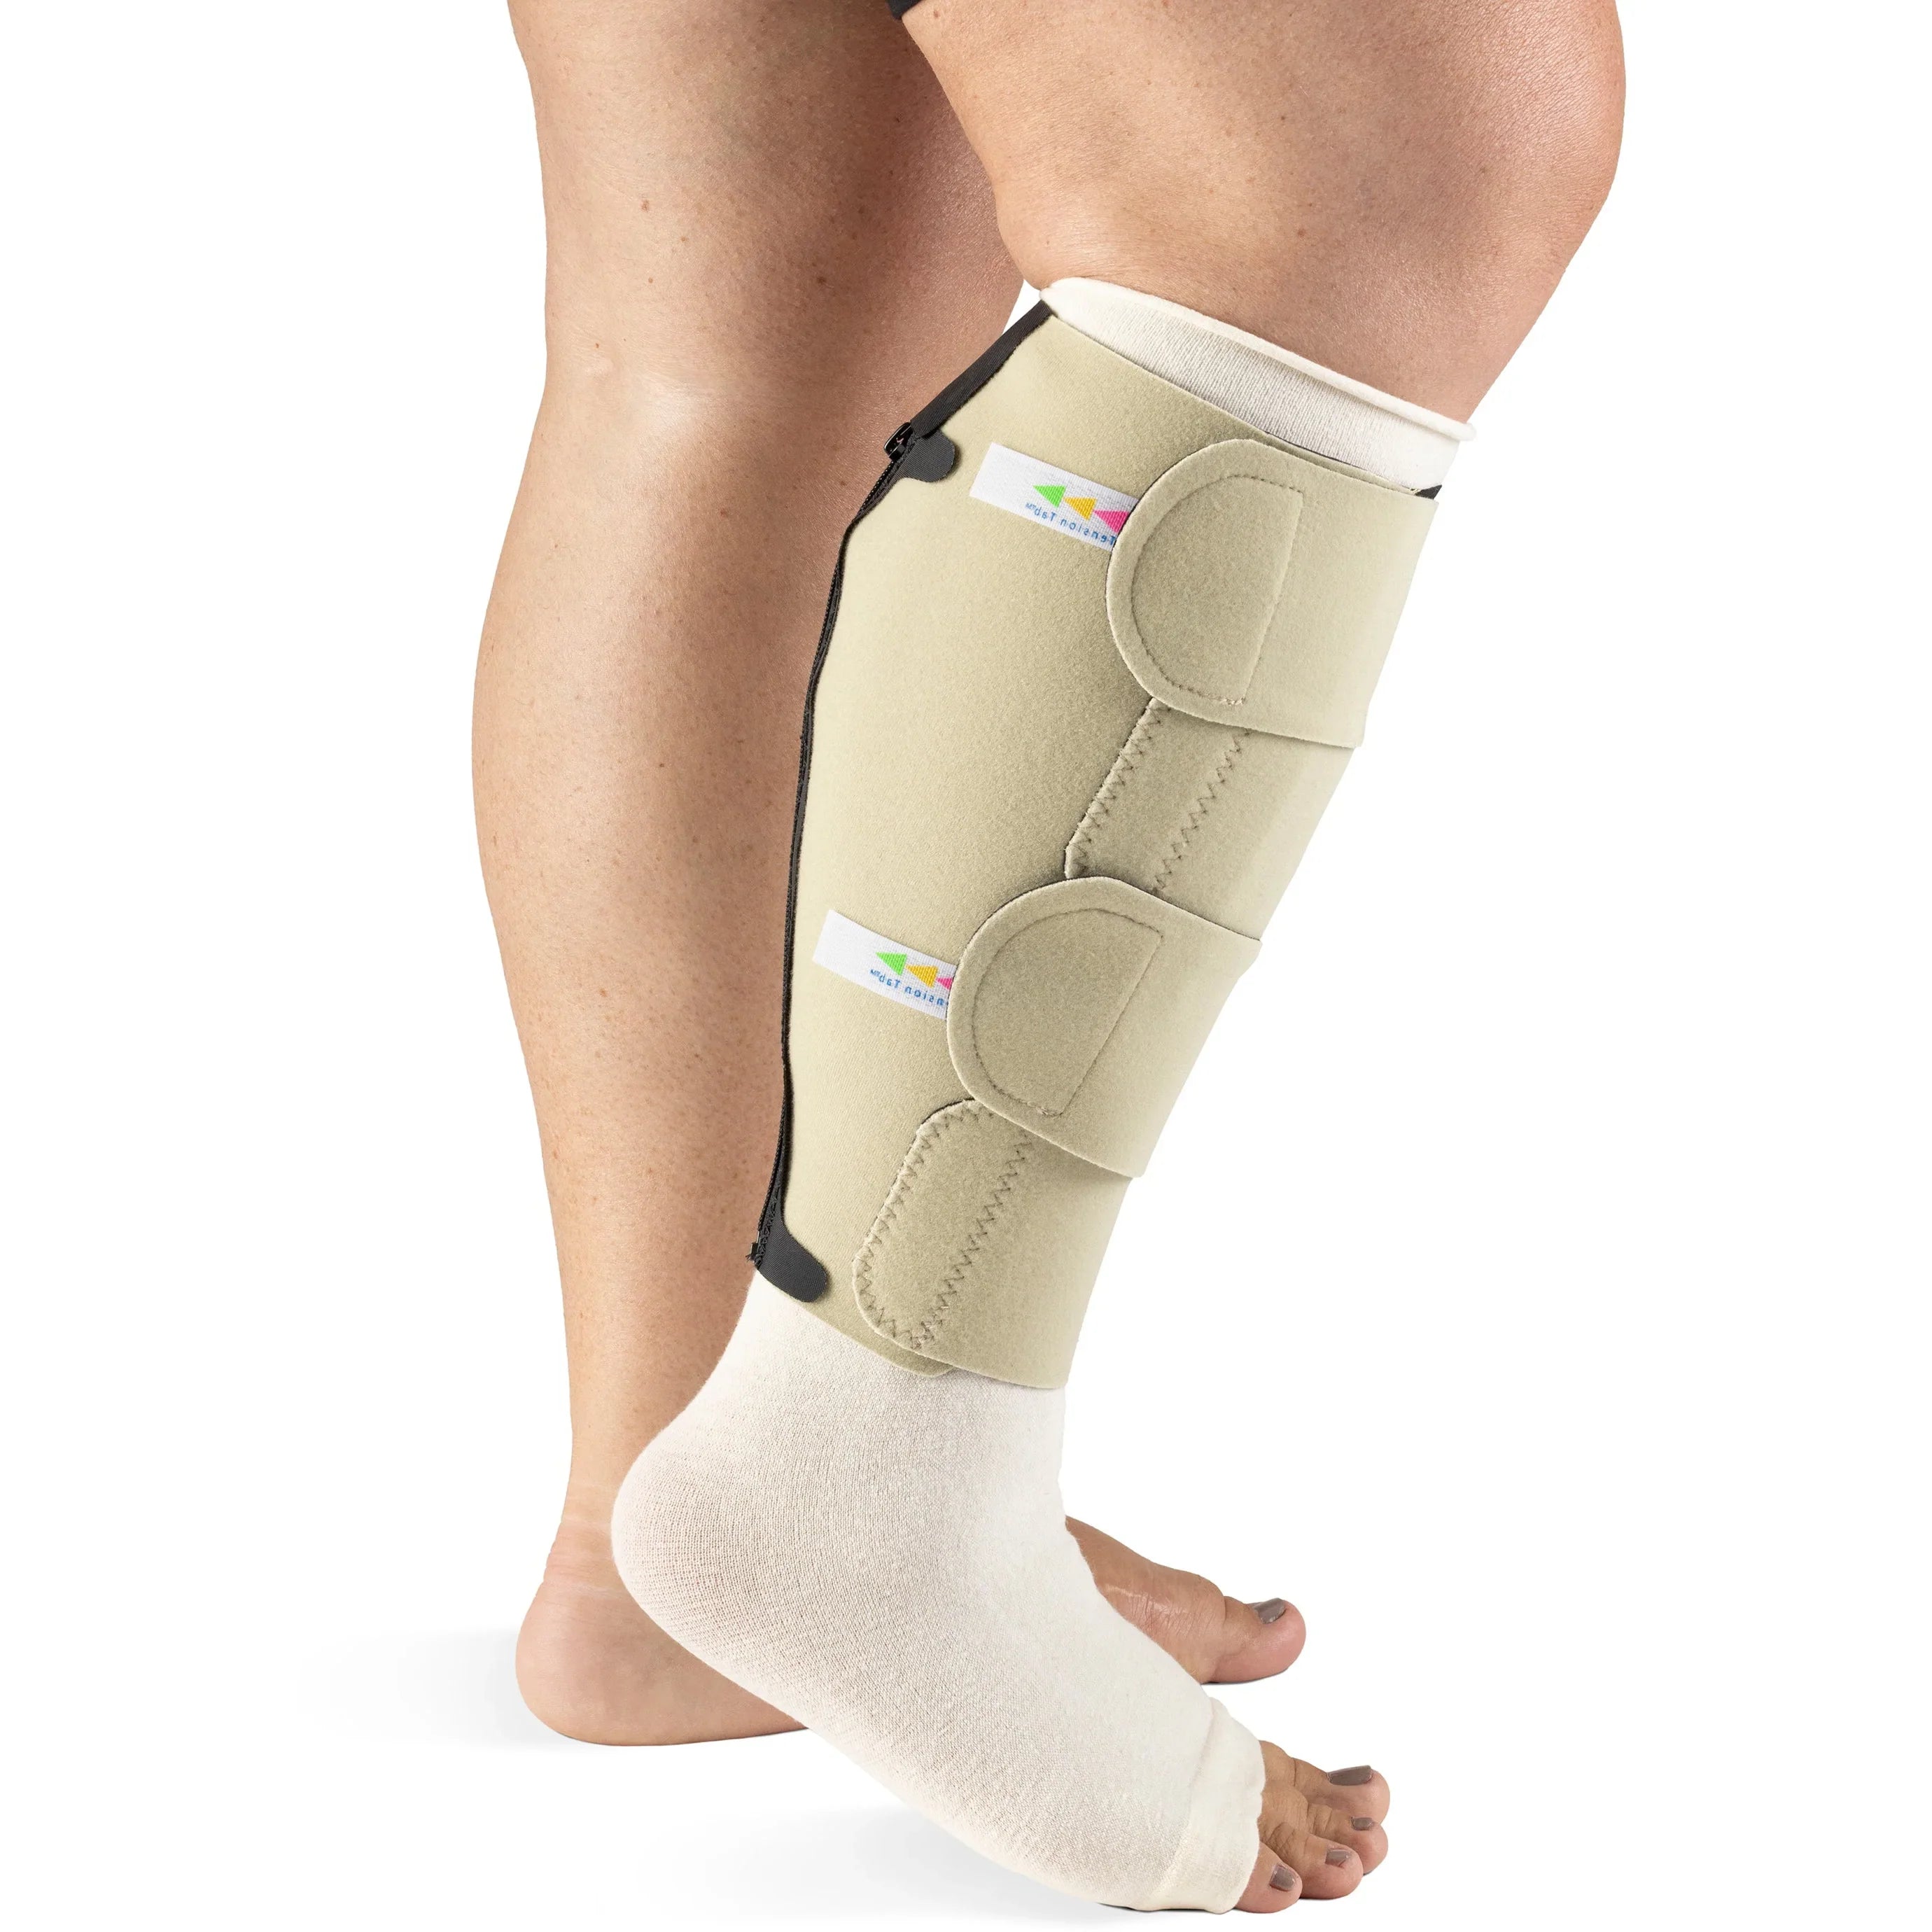 CompreCares Compression Strap Extender for Leg or Foot